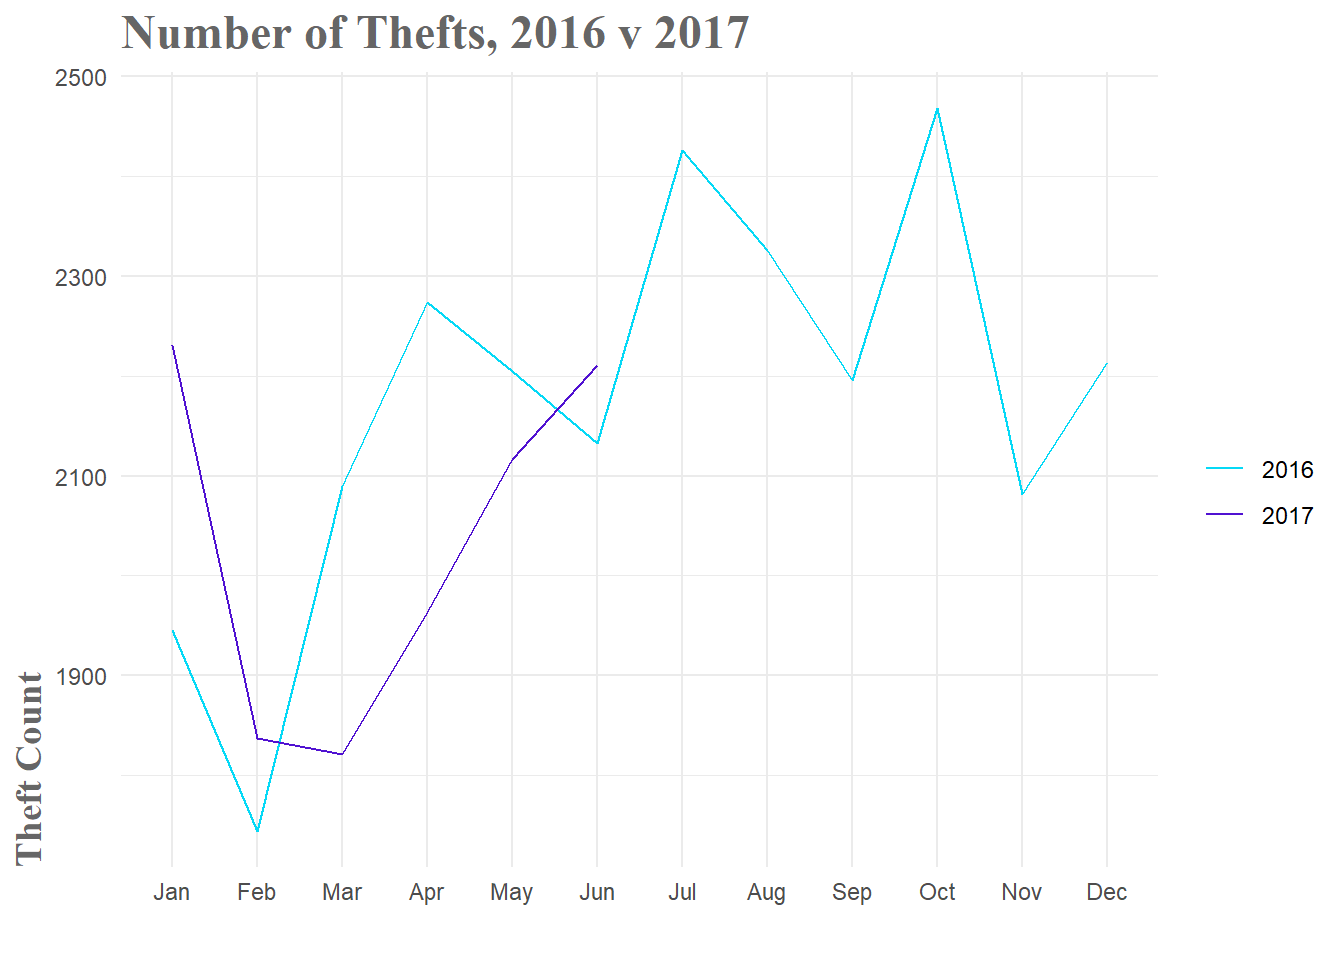 2016 v 2017 Theft Comparison